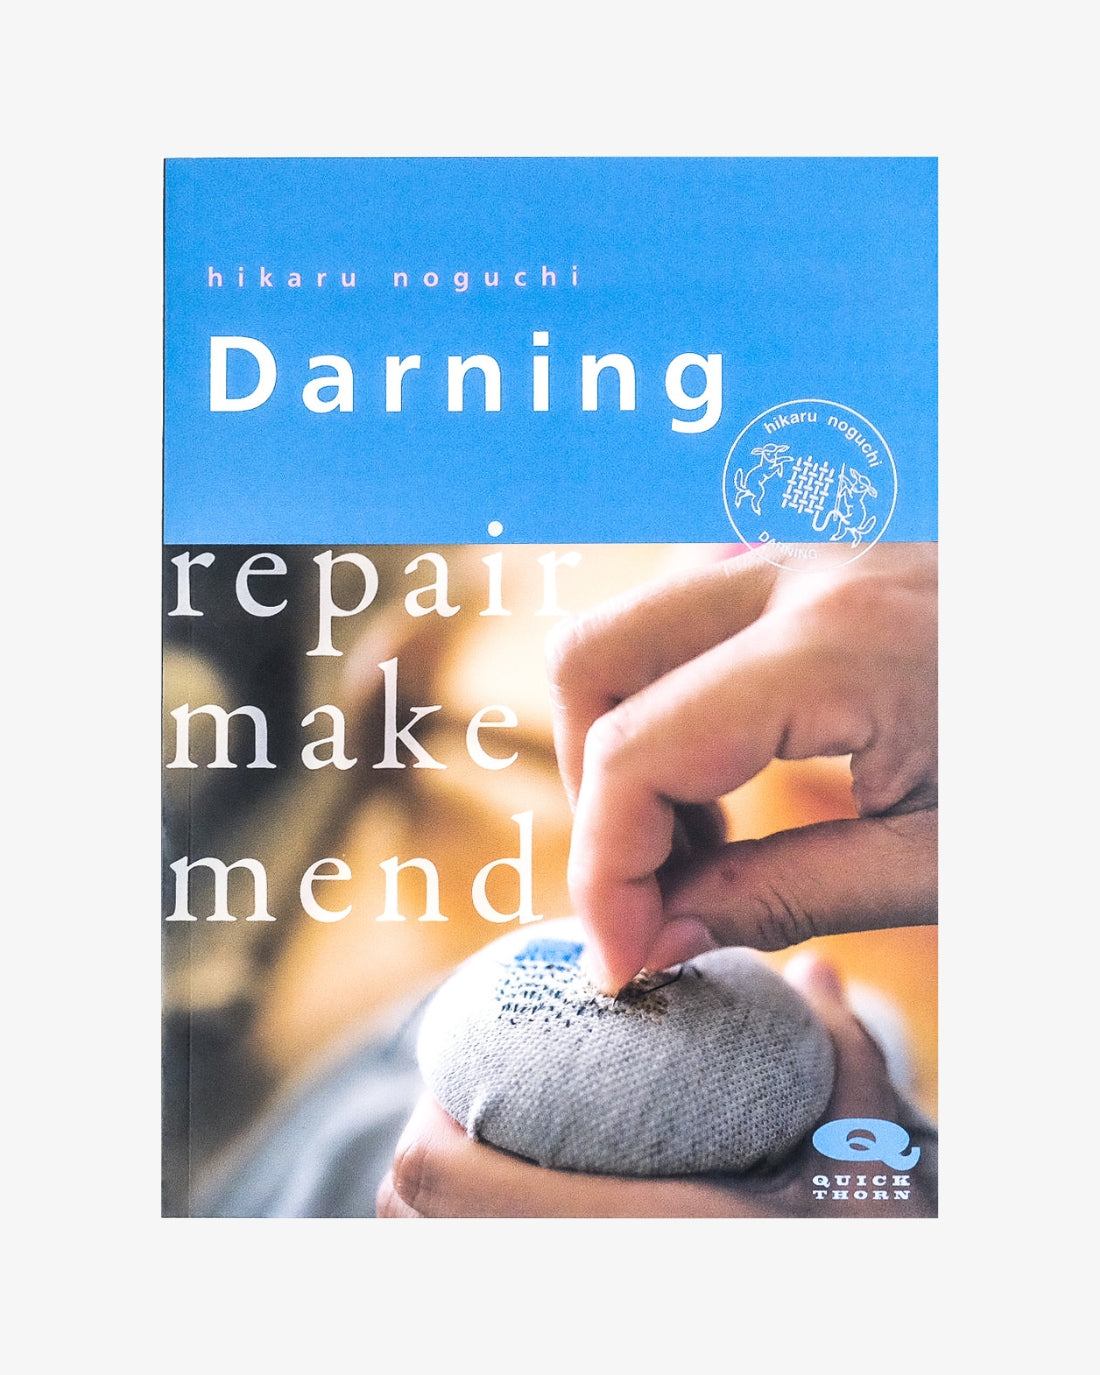 Darning: Repair, Make, Mend by Hikaru Noguchi